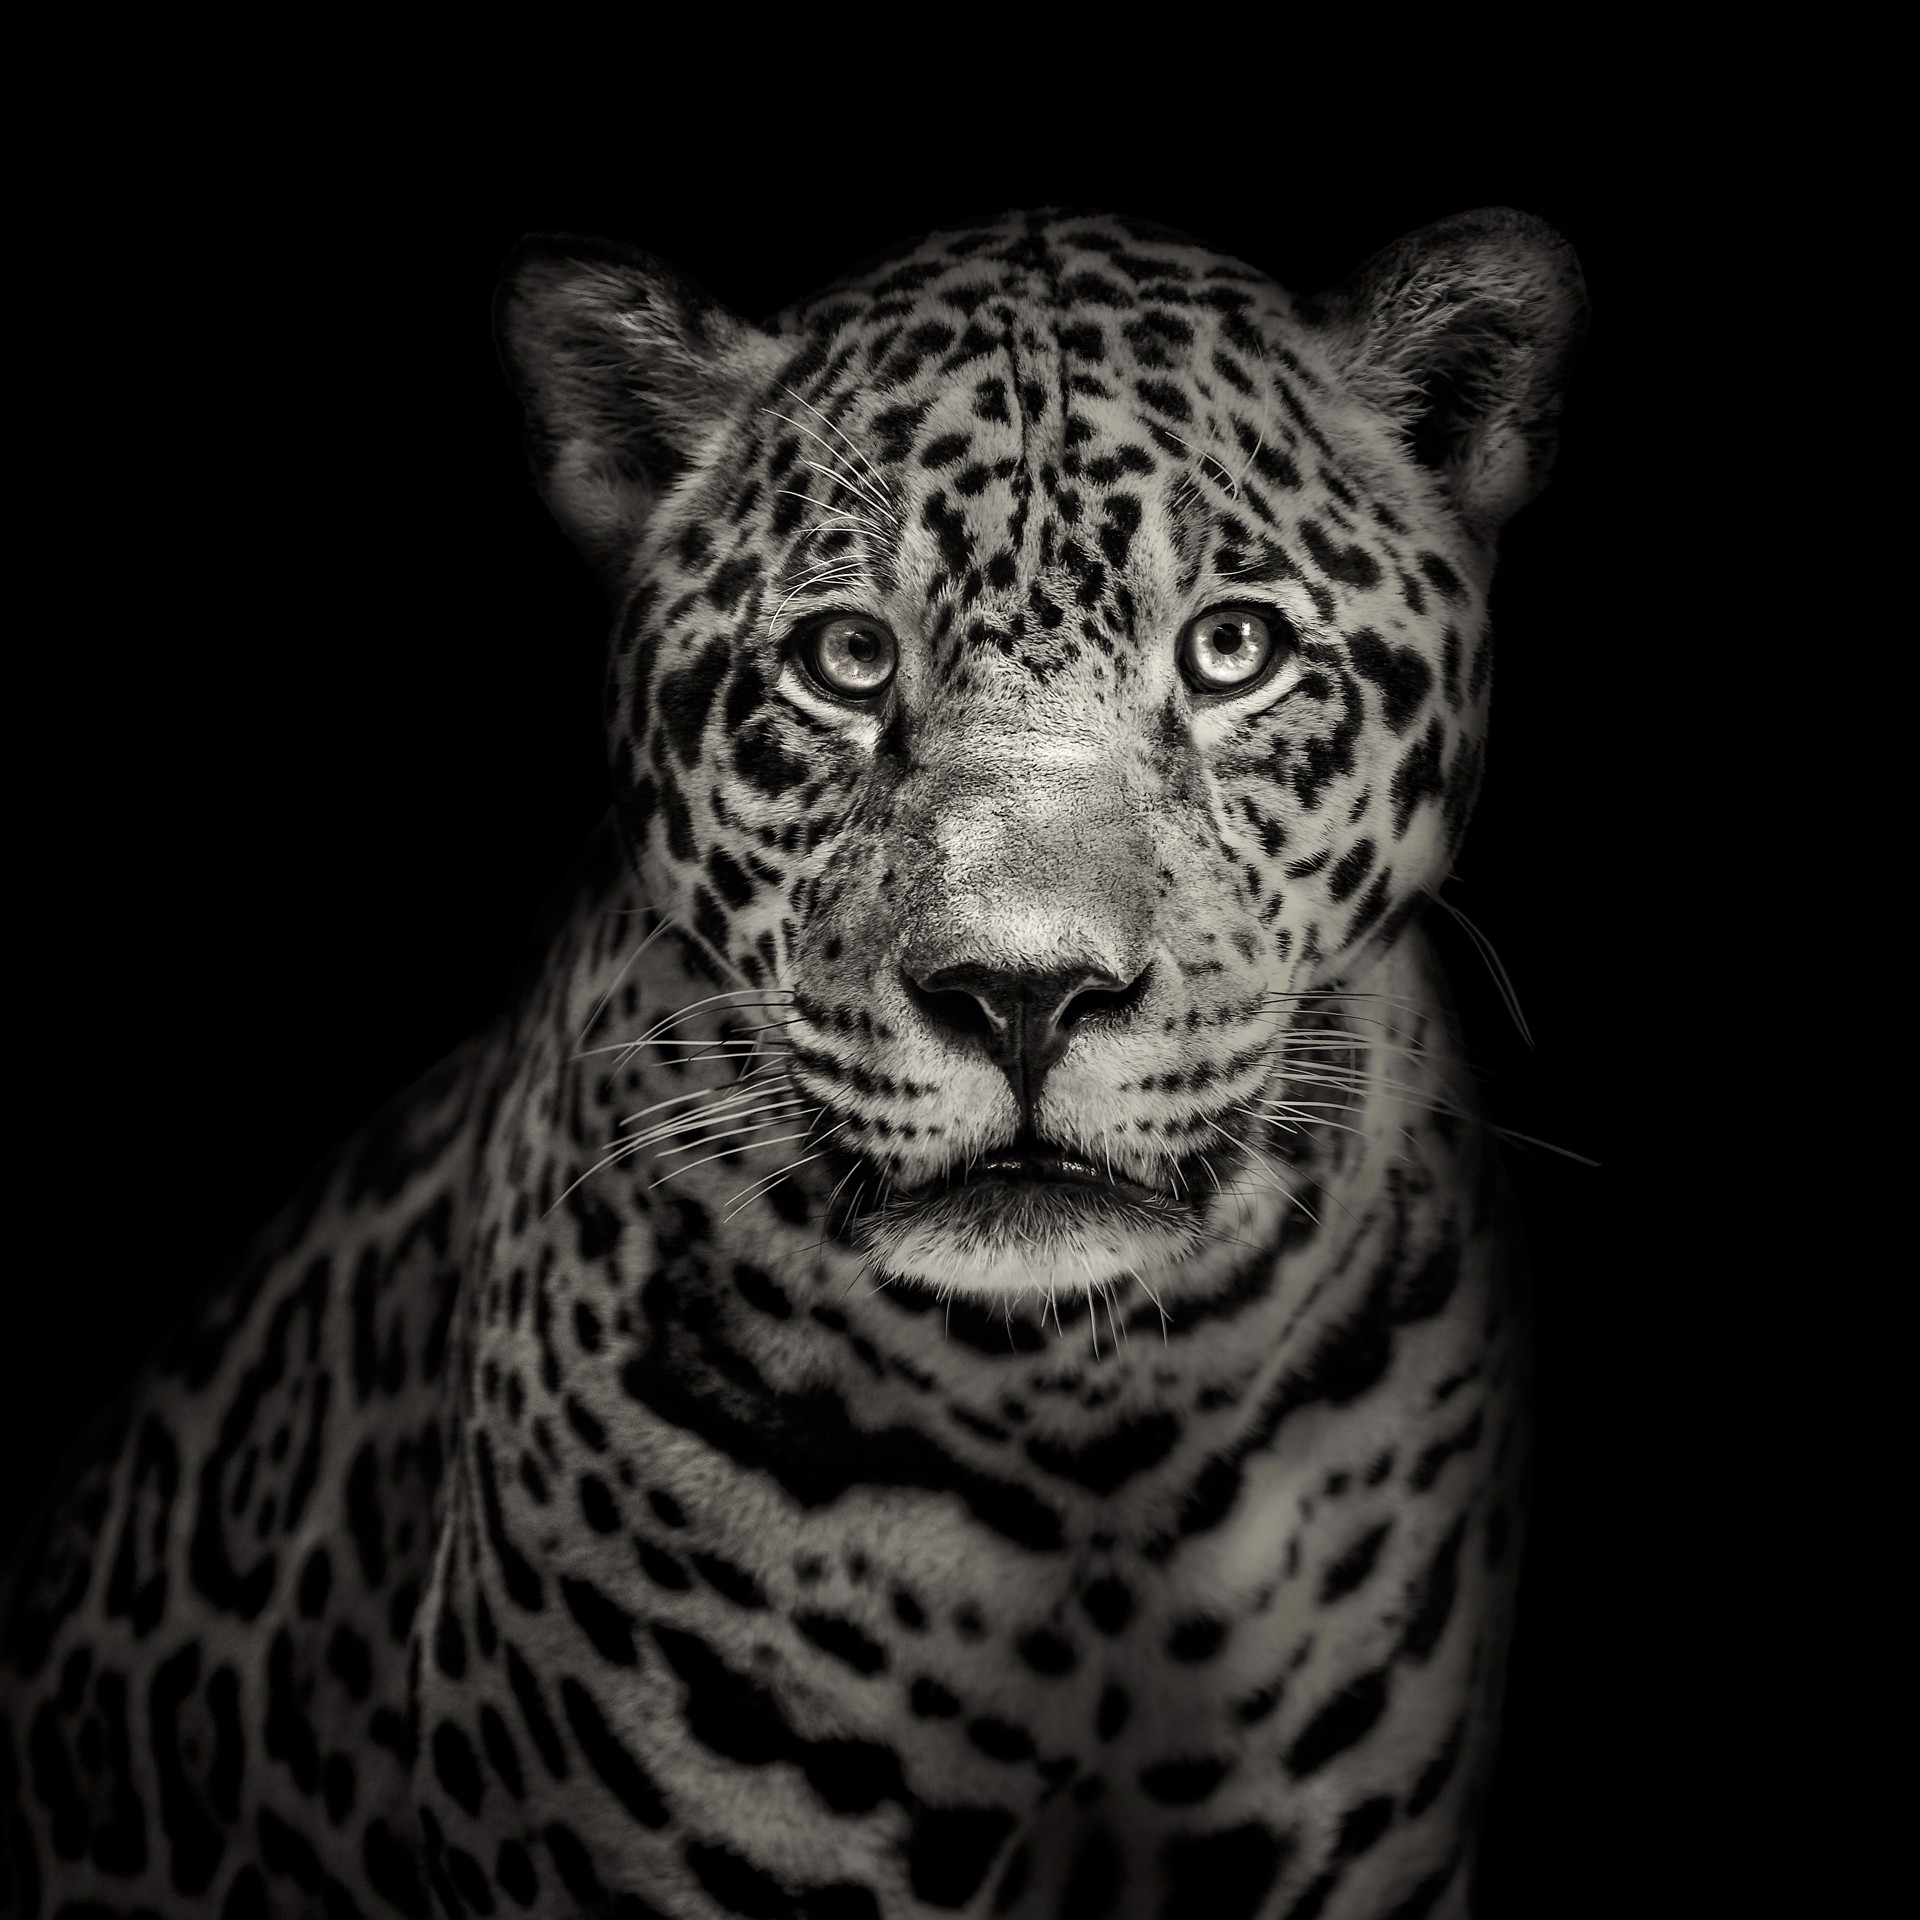 Portrait of a Jaguar by Lauren Chambers